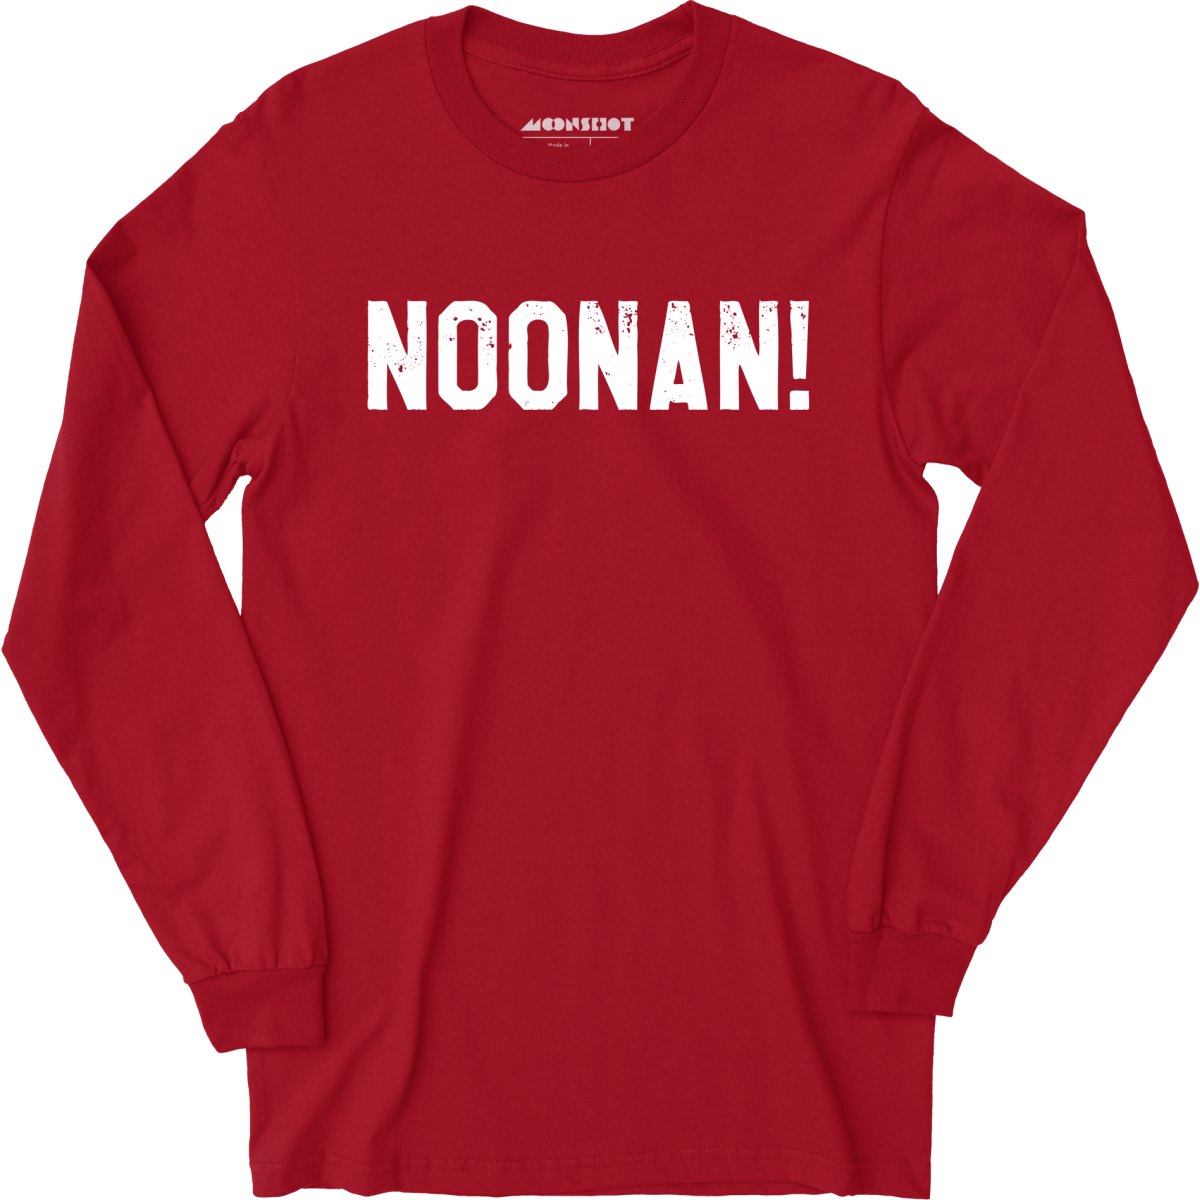 Noonan! - Long Sleeve T-Shirt